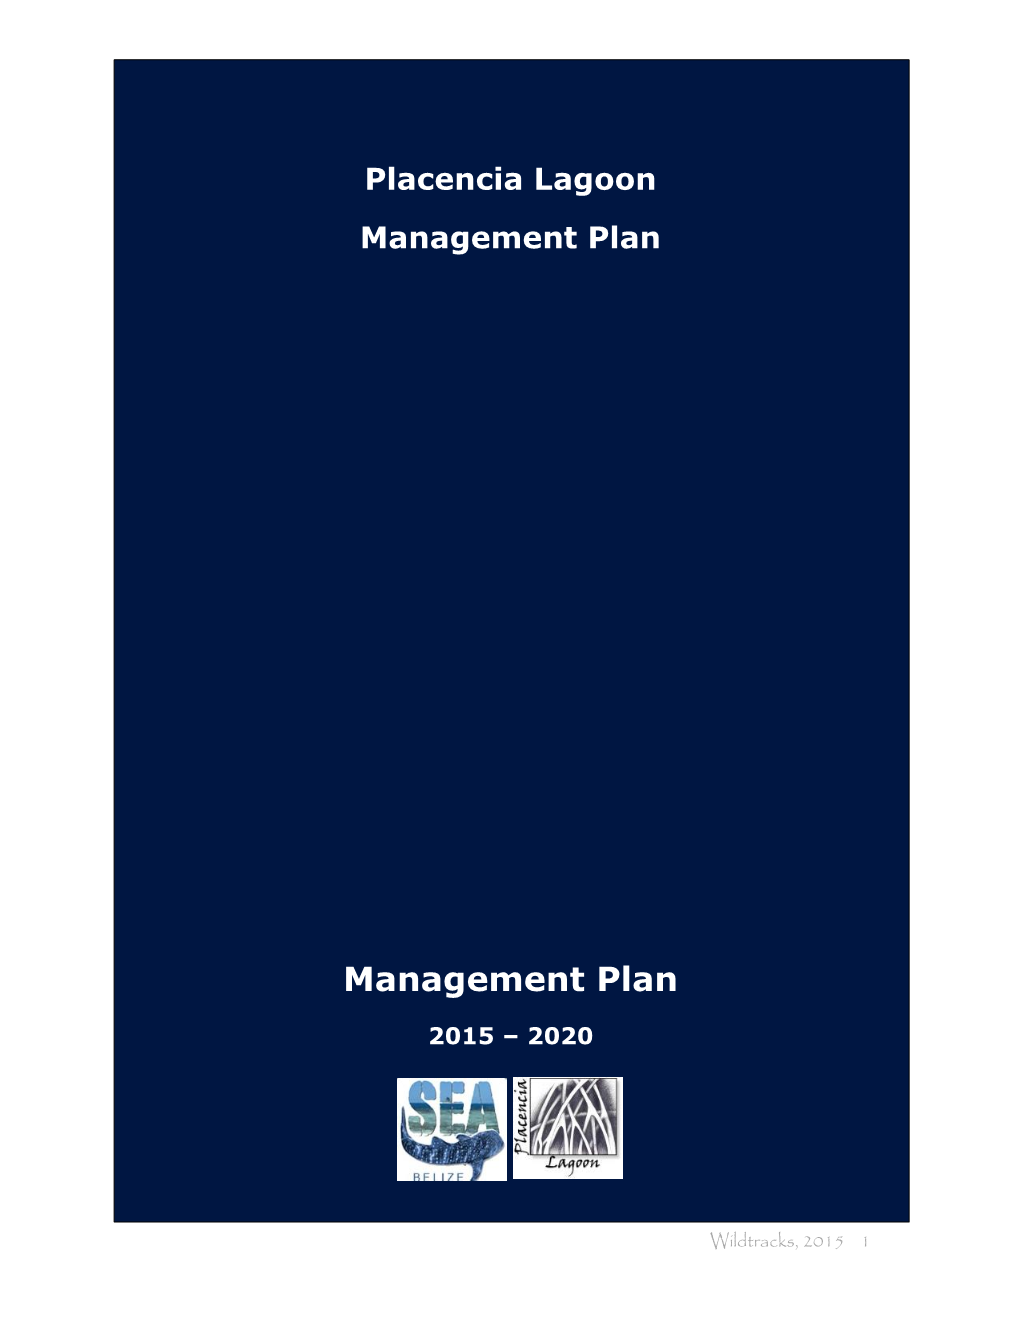 Placencia Lagoon Management Plan Management Plan